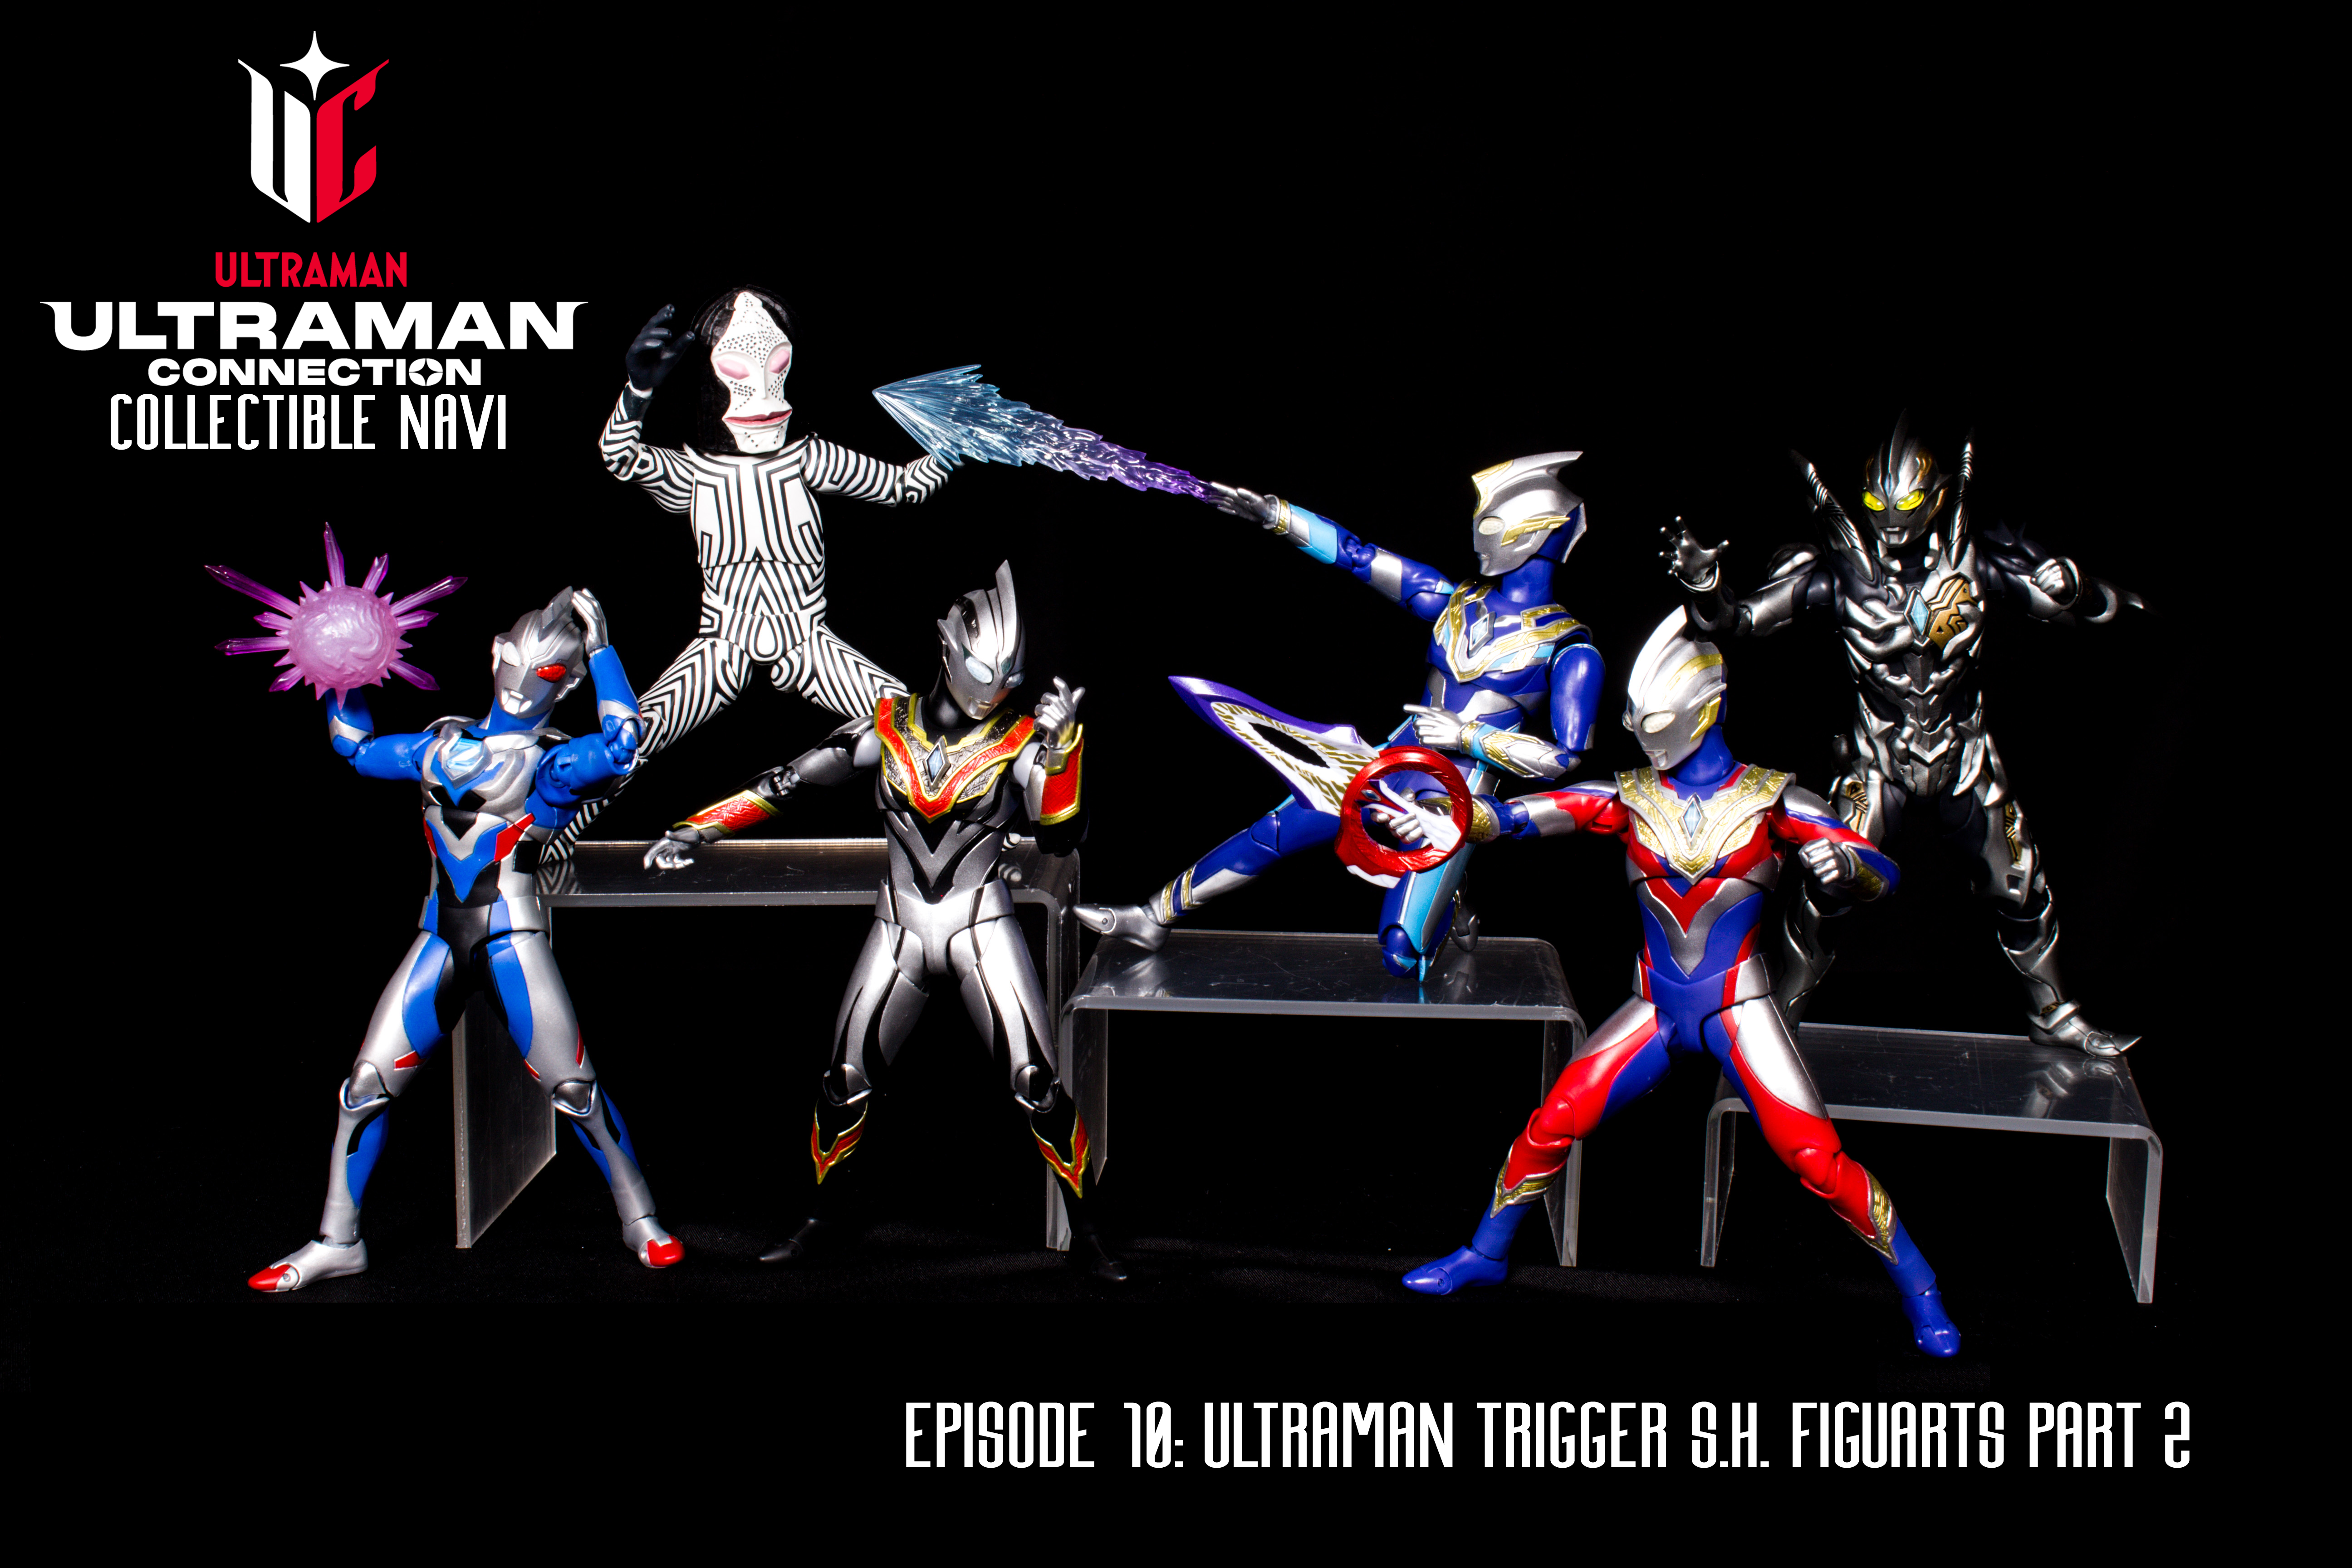 Ultraman Connection Collectible Navi Episode 10: Ultraman Trigger (Part 2)